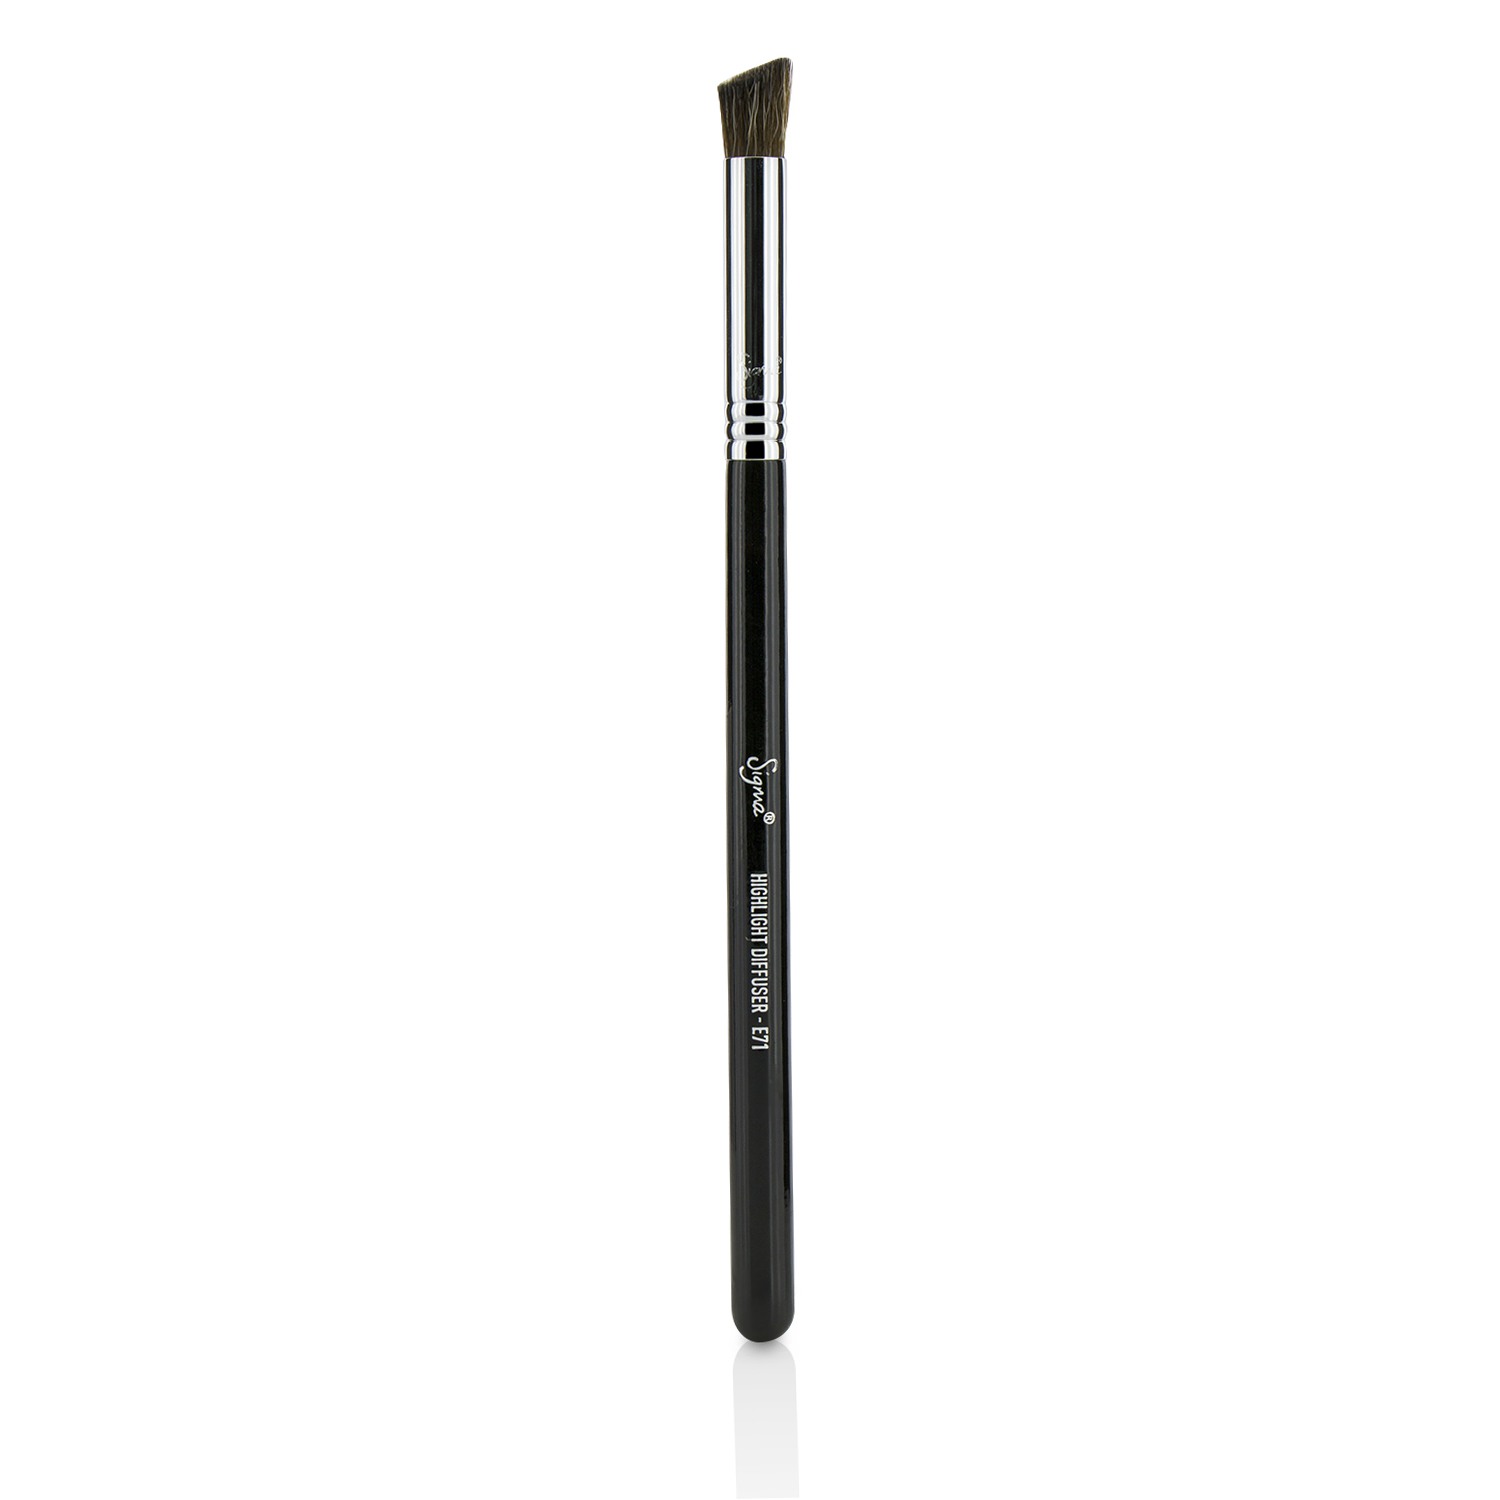 E71 Highlight Diffuser Brush Sigma Beauty Image